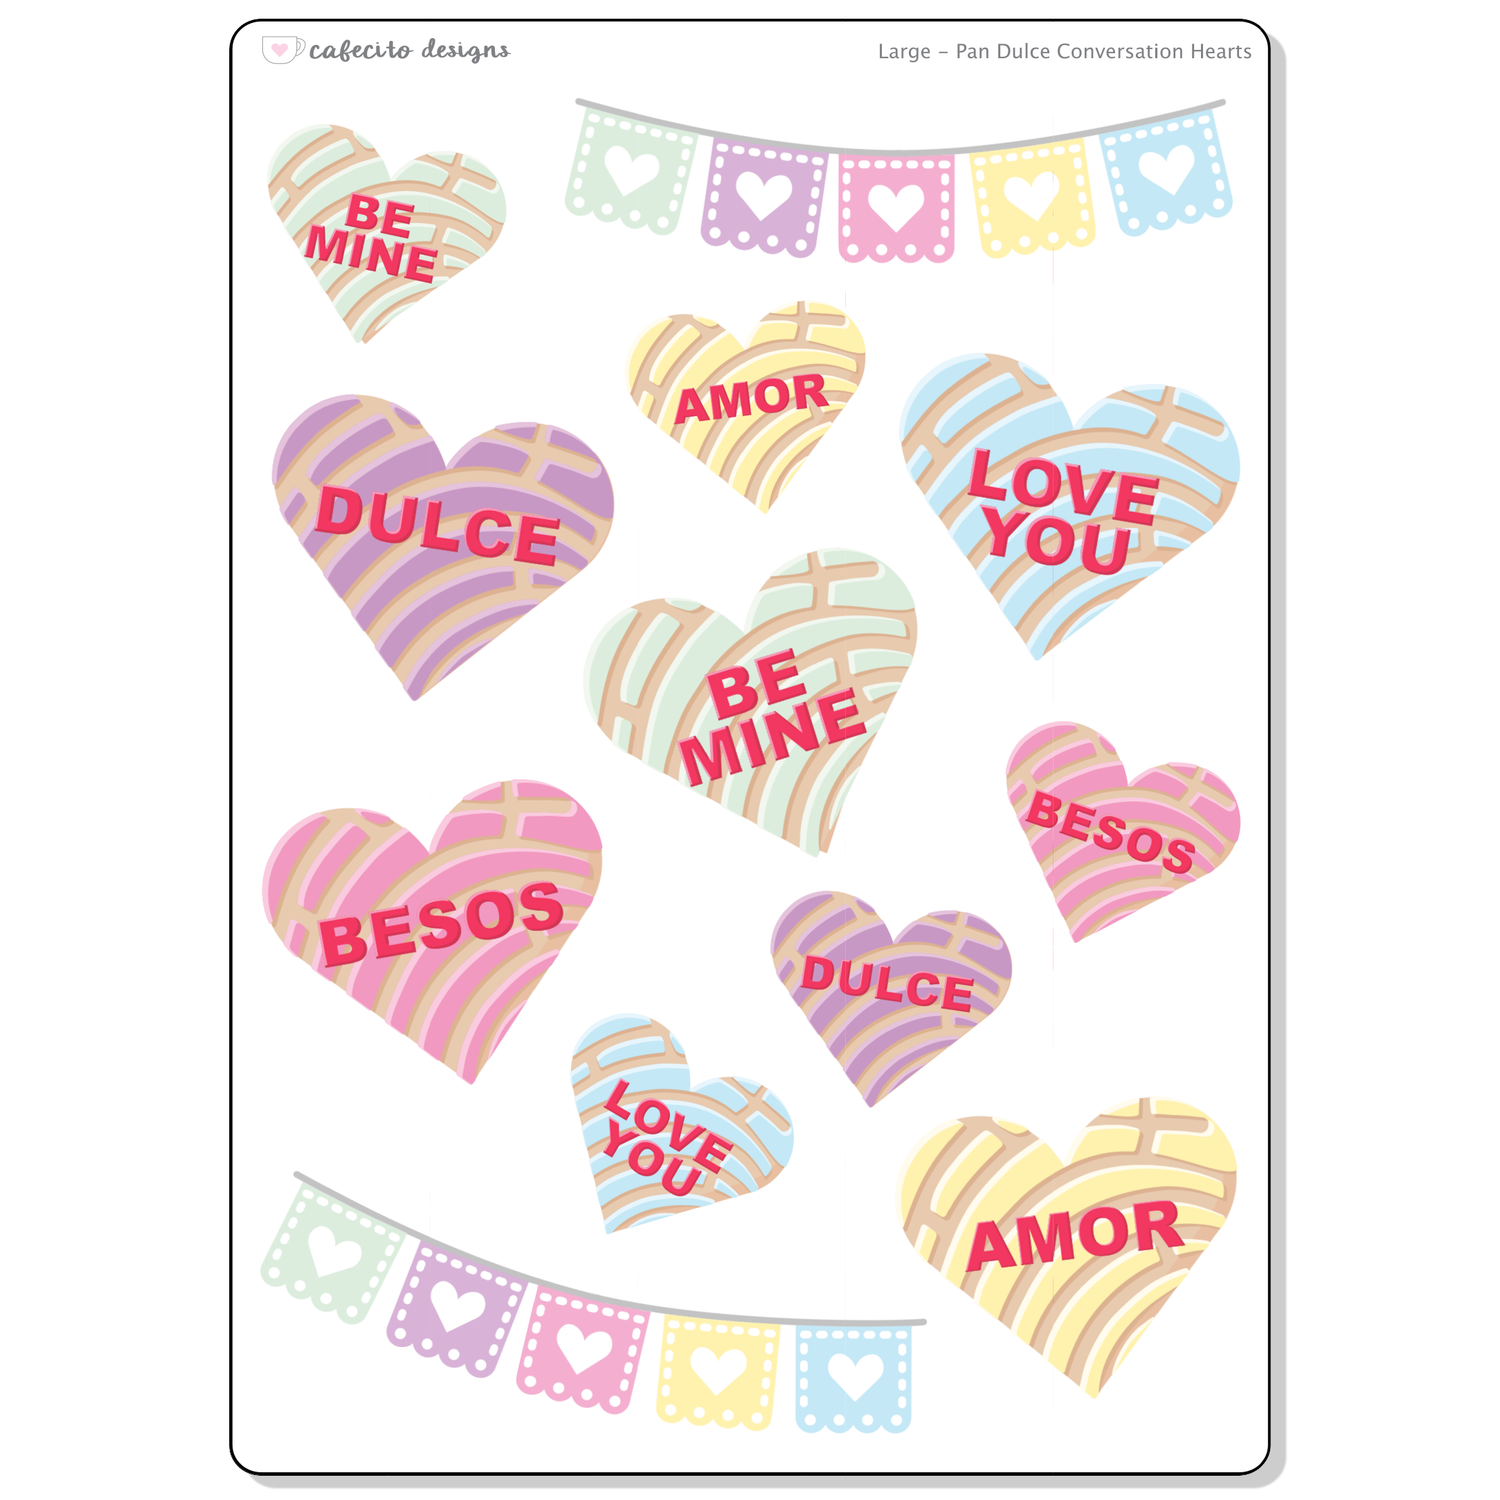 Pan Dulce Conversation Hearts - Large Deco Sticker Sheet